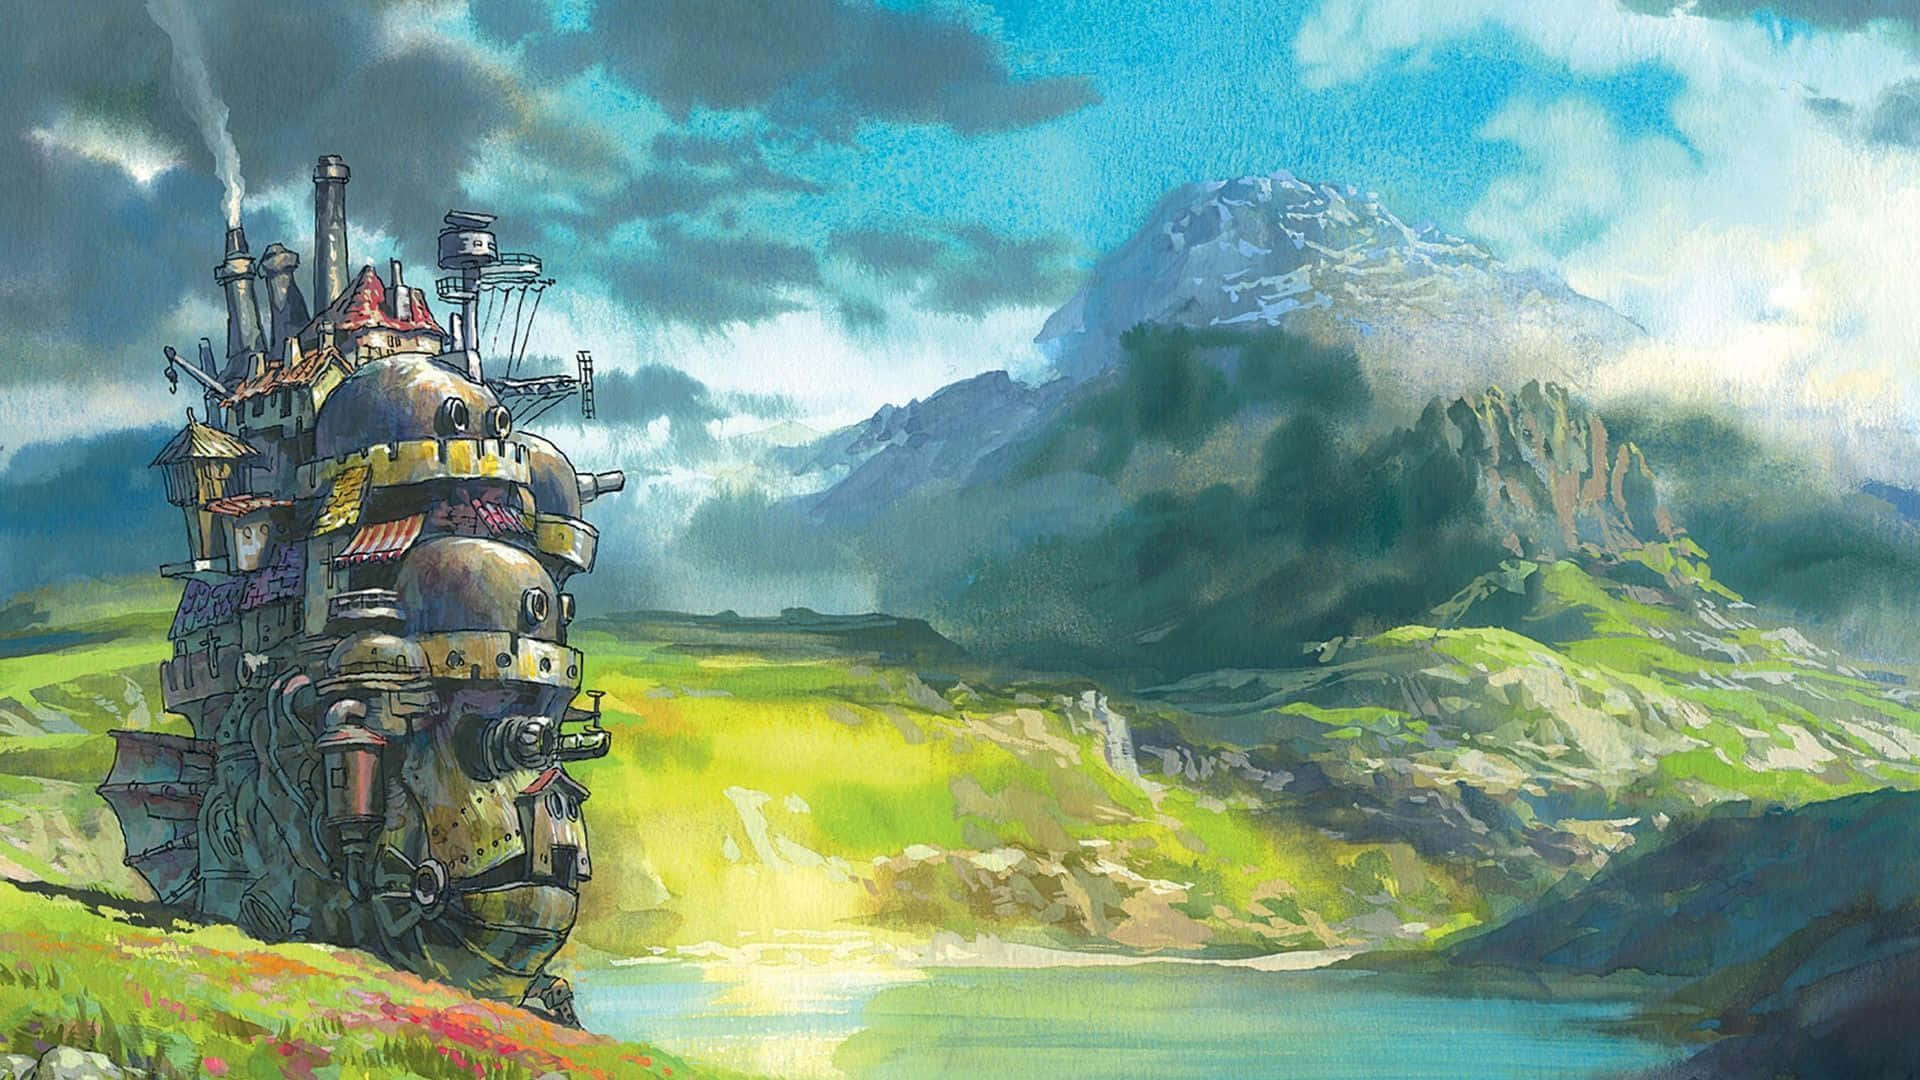 Studio Ghibli Moving Castle Landscape Wallpaper